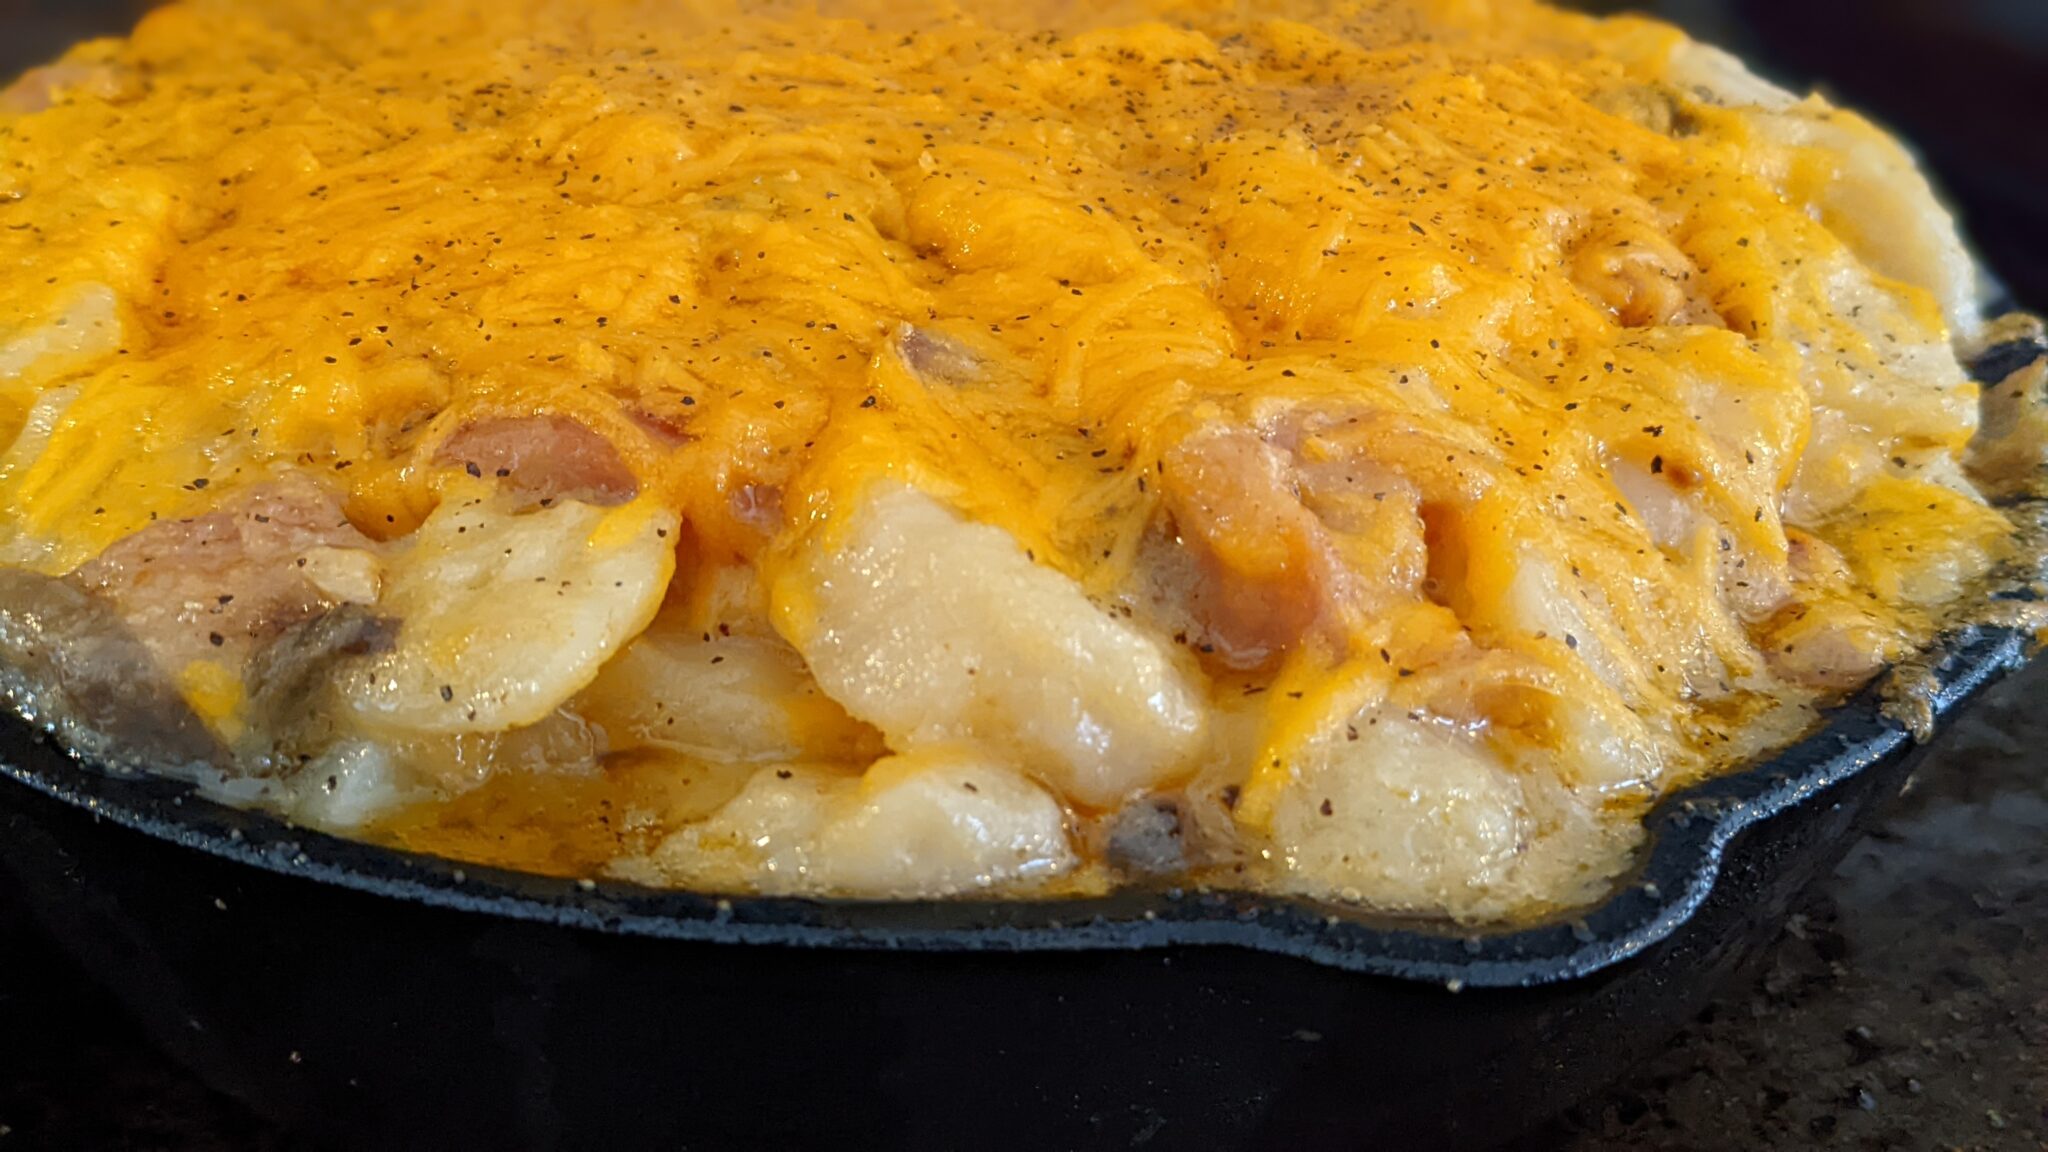 Cheesy potato bake close-up. Say cheese!